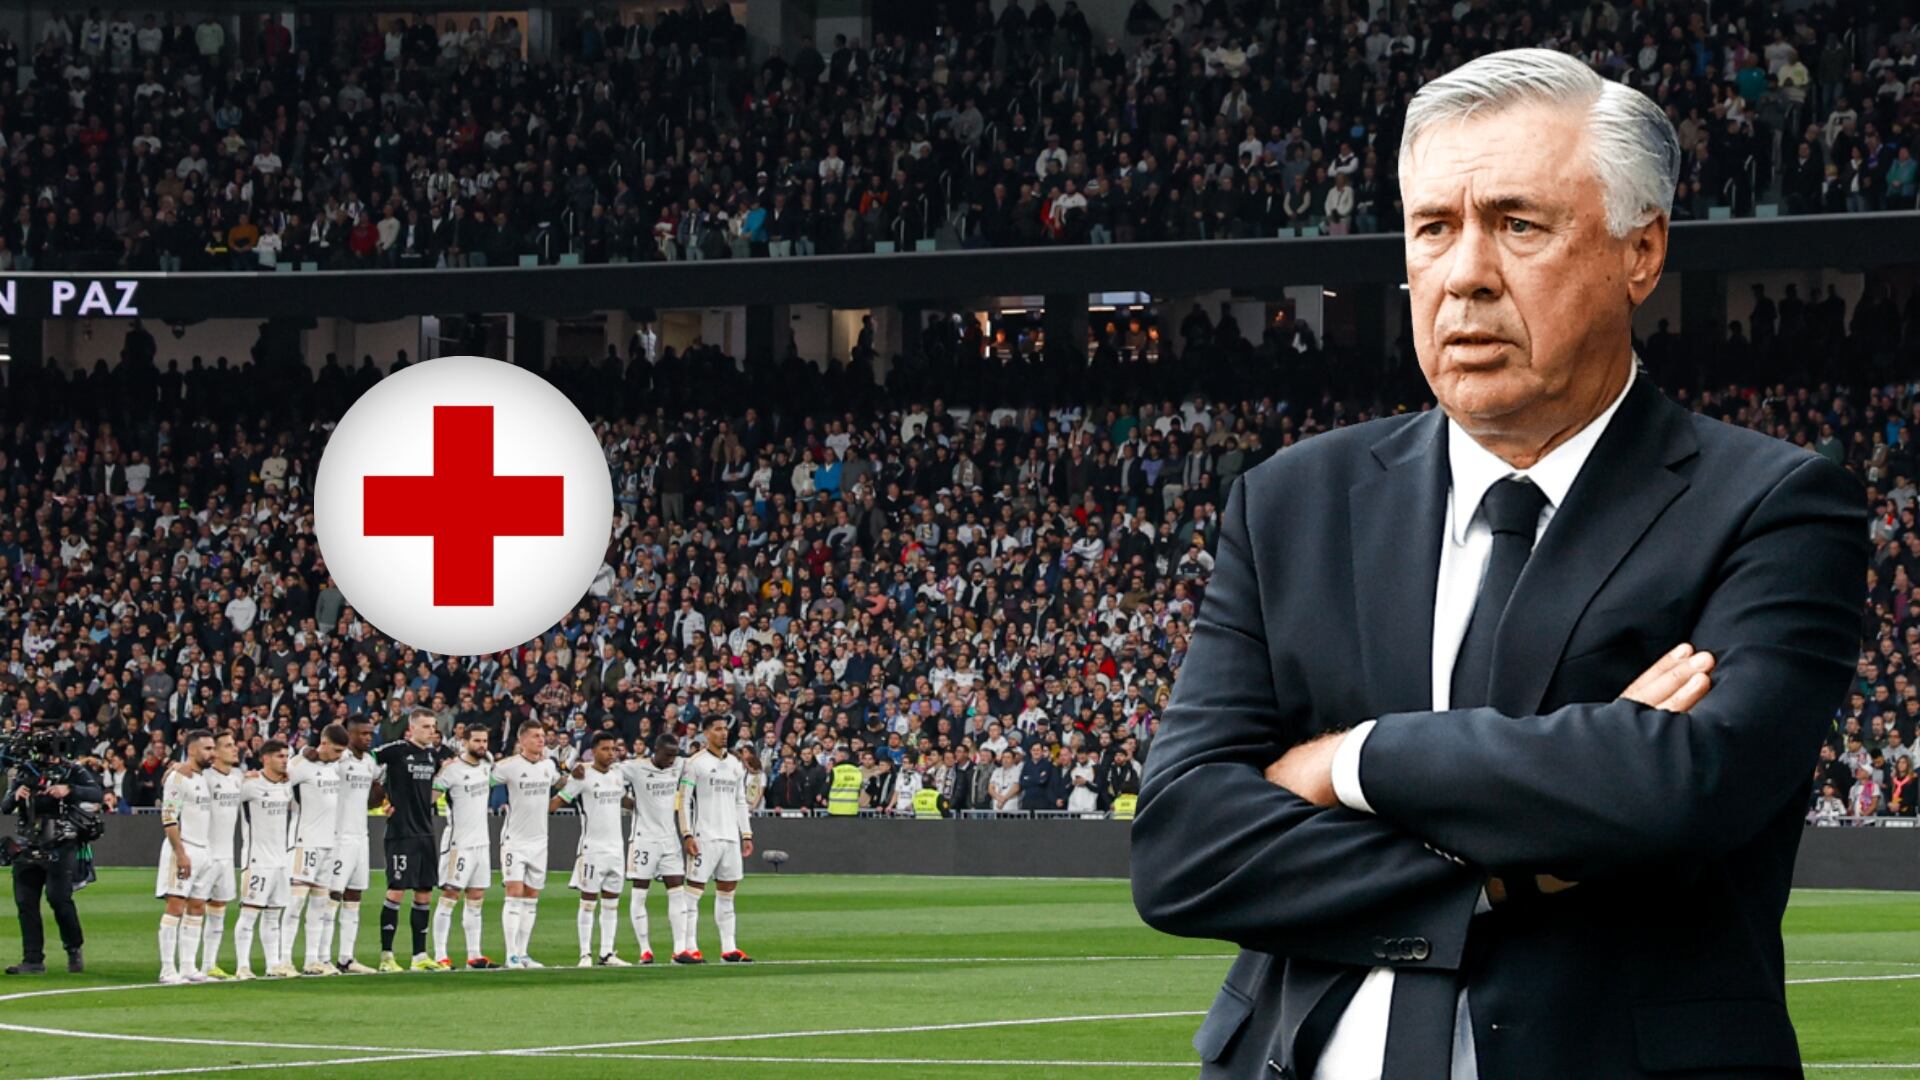 Ancelotti en ascuas, las dudas que deben resolverse antes del partido vs Girona